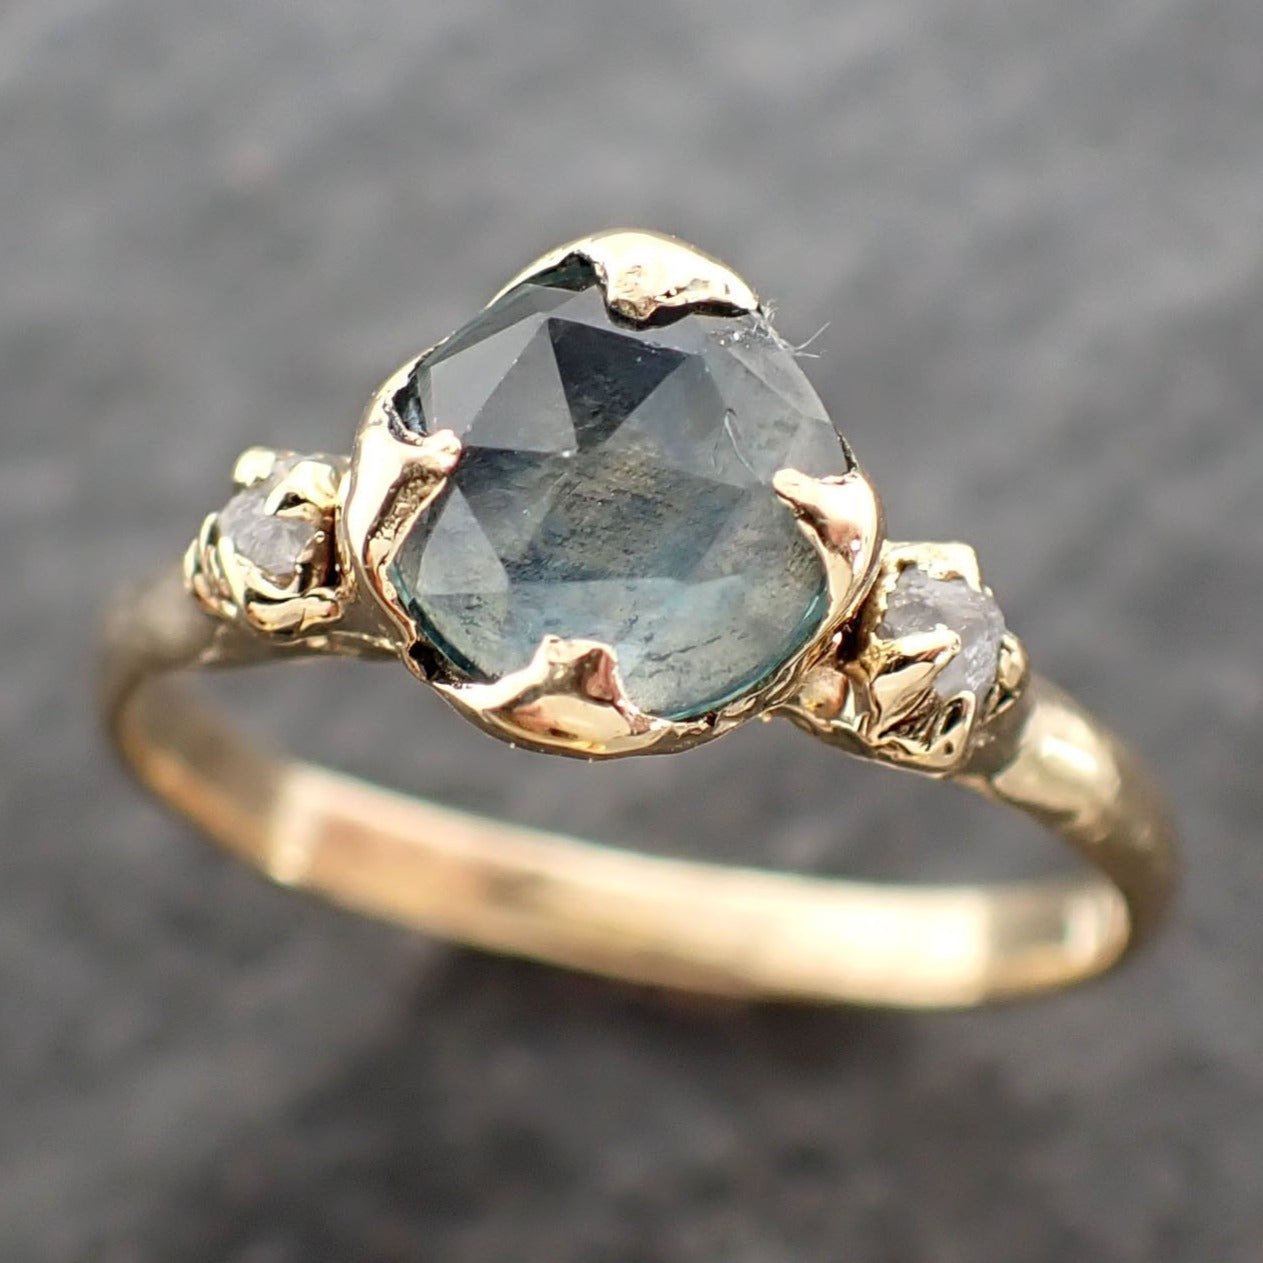 fancy cut montana sapphire diamond 18k yellow gold engagement ring wedding ring blue gemstone ring multi stone ring 2570 Alternative Engagement